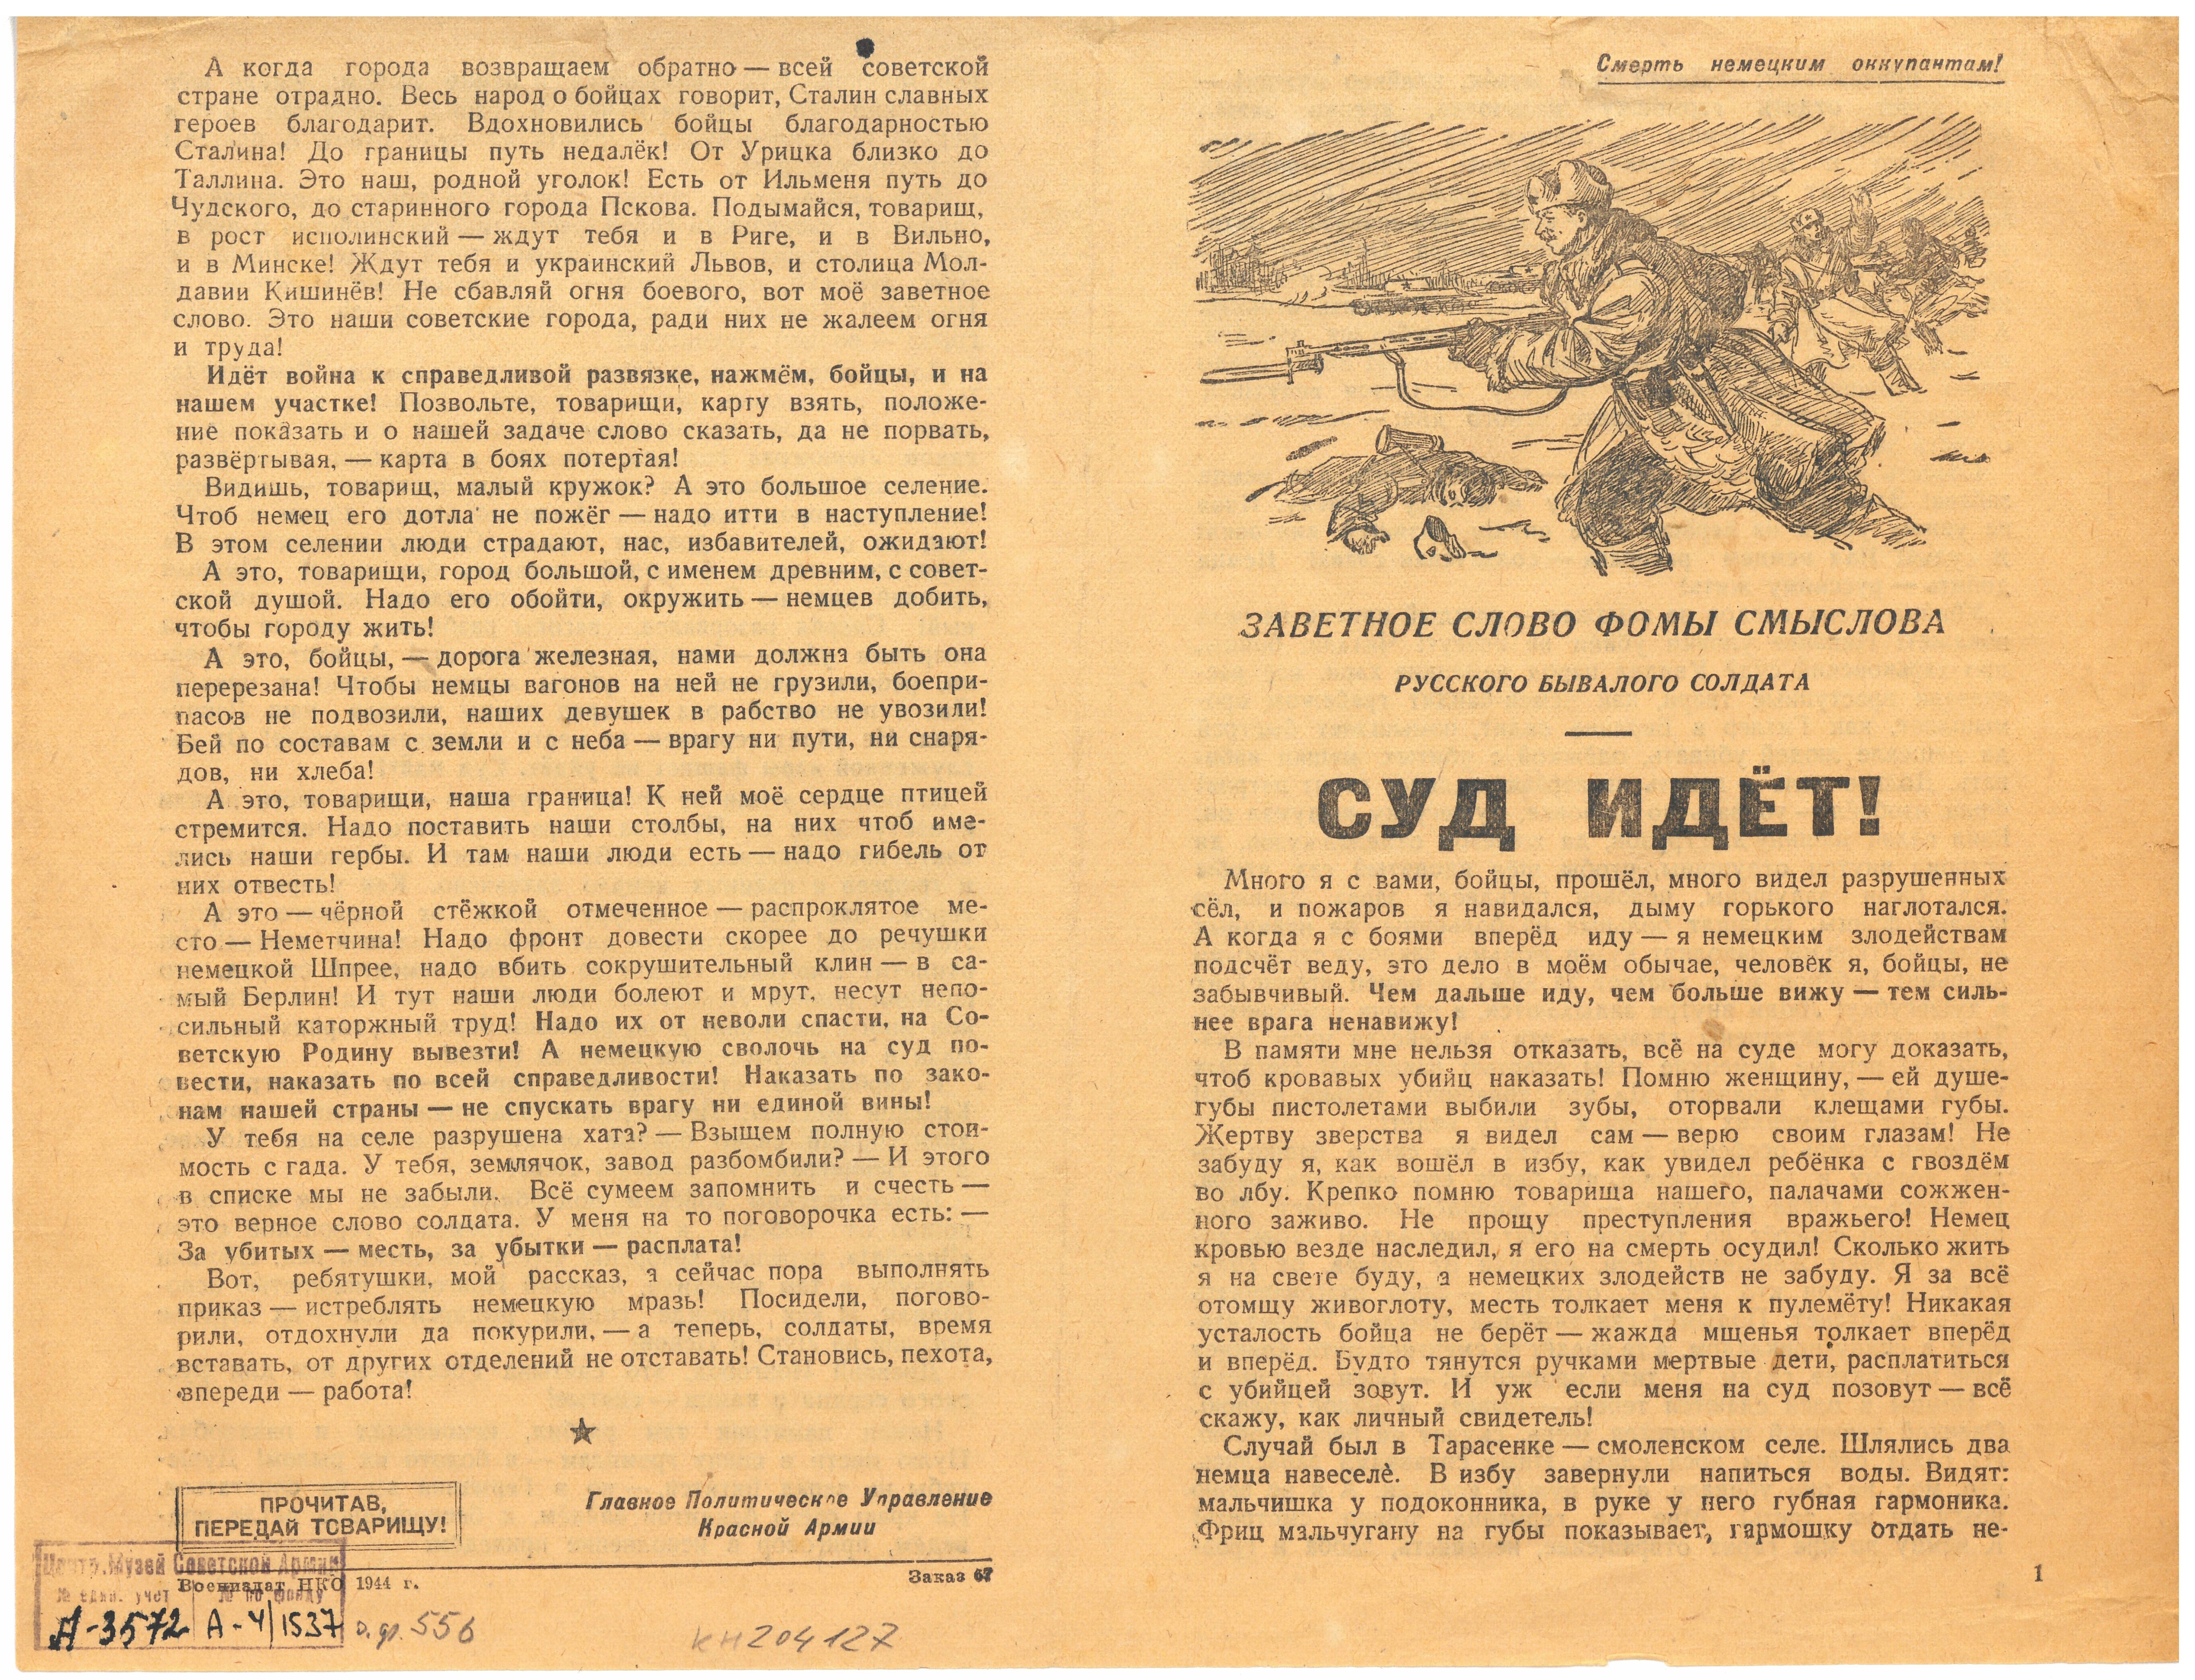 Sowjetisches Flugblatt "Das Gericht tagt", 1944 (Museum Berlin-Karlshorst CC BY-NC-SA)